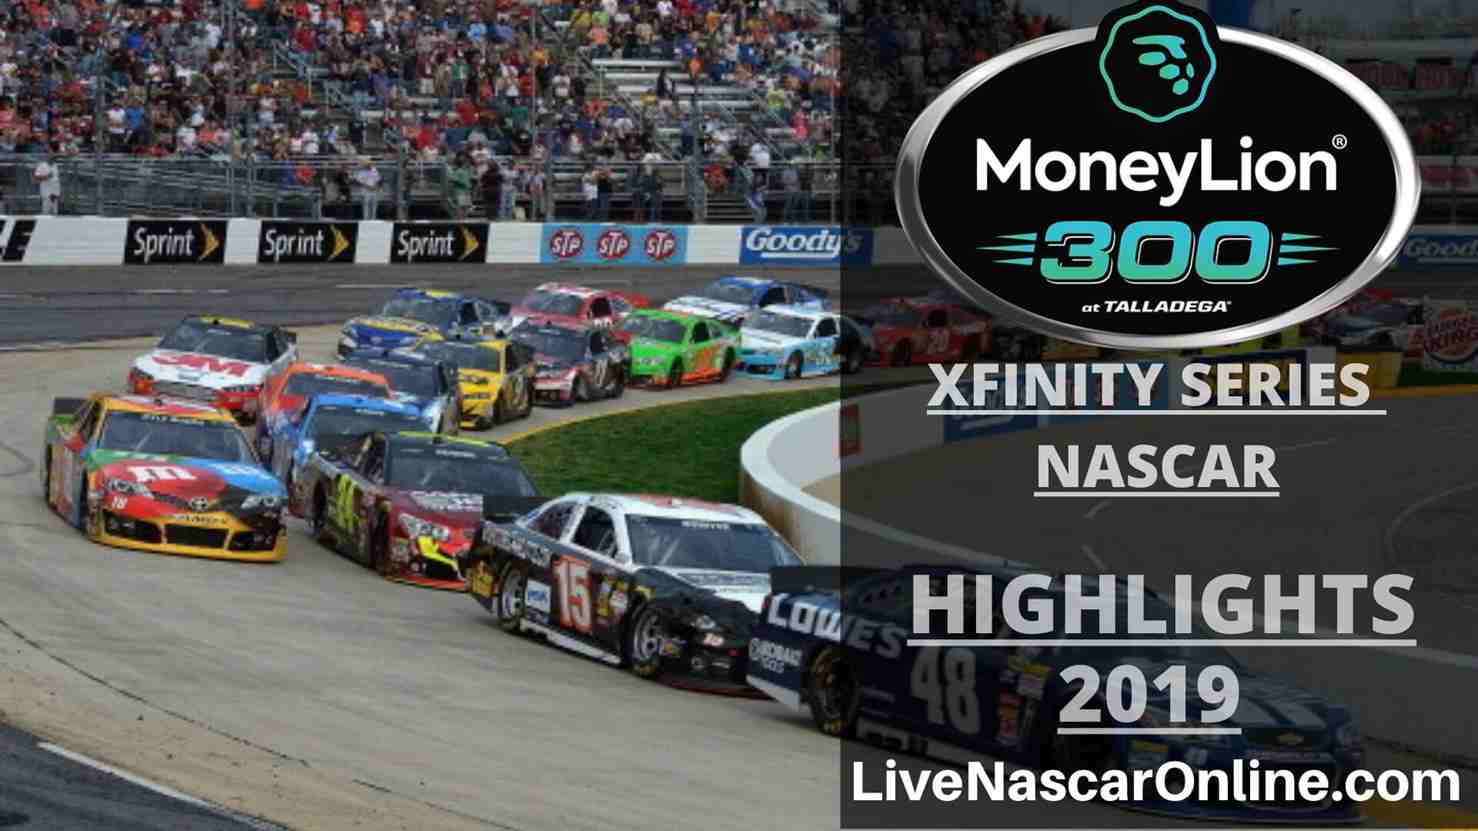 NASCAR XFINITY SERIES MONEYLION 300 HIGHLIGHTS 2019